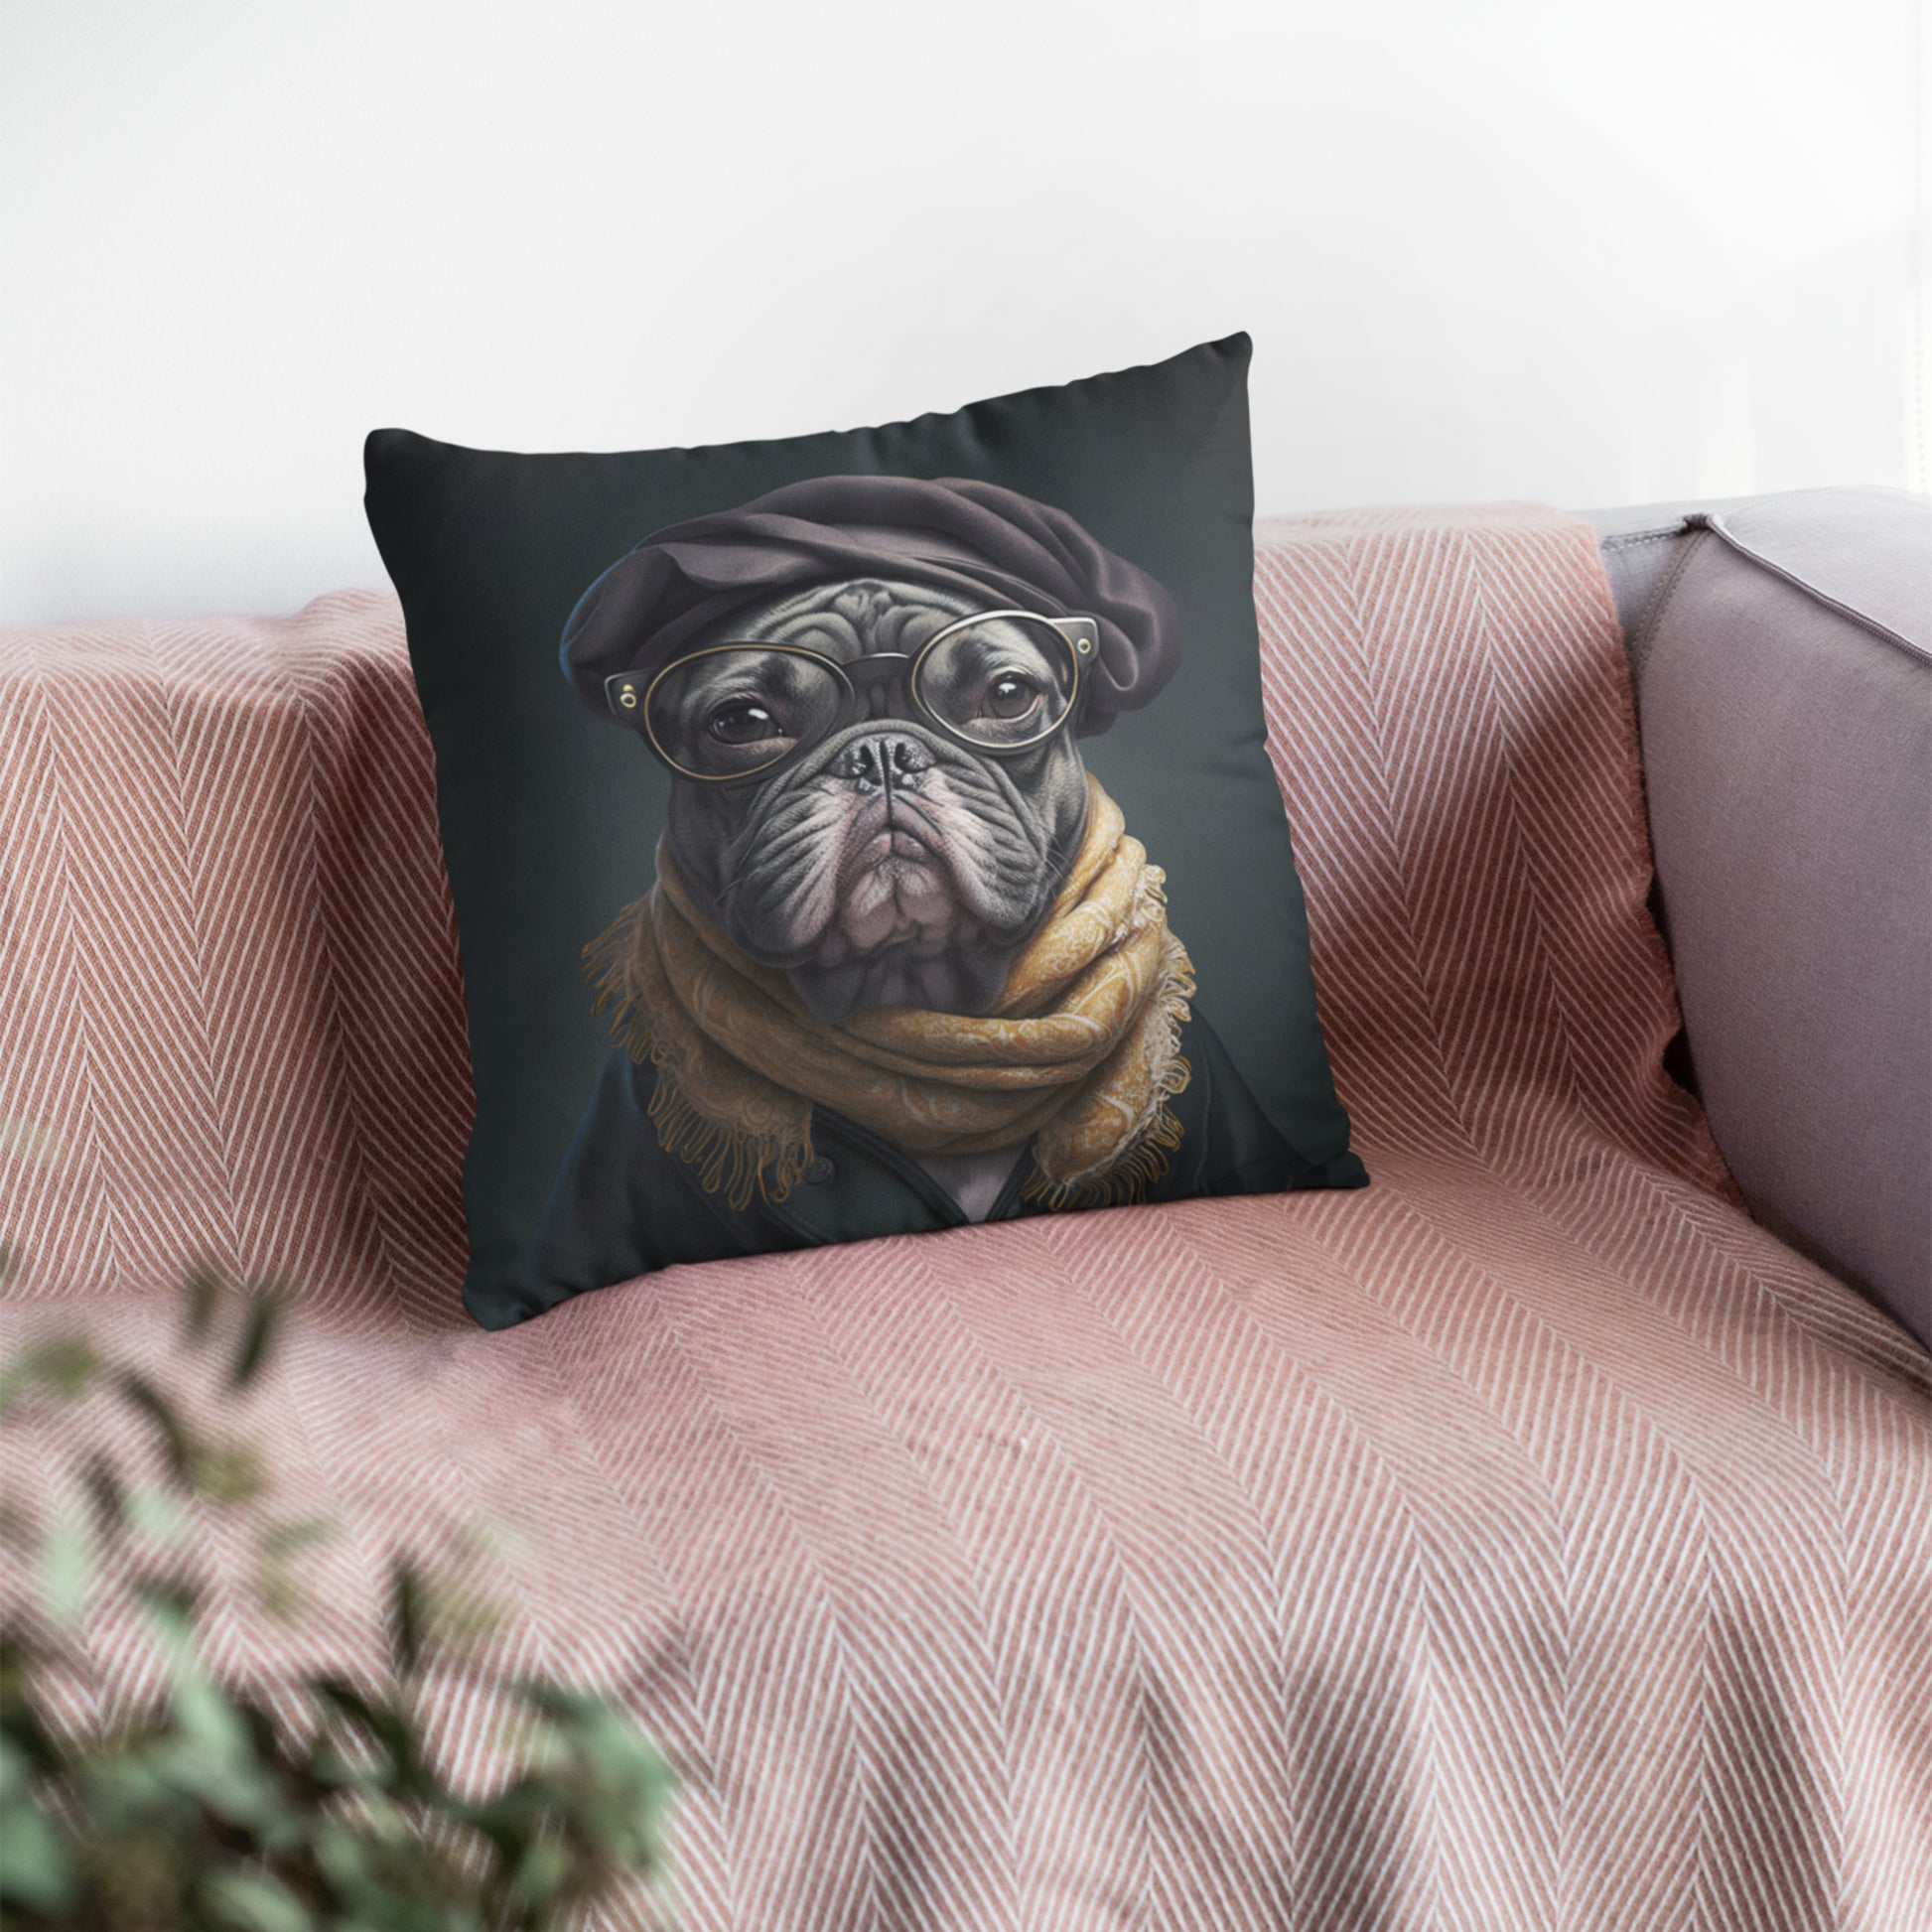 Homeezone's Artist Bulldog Theme Pillow